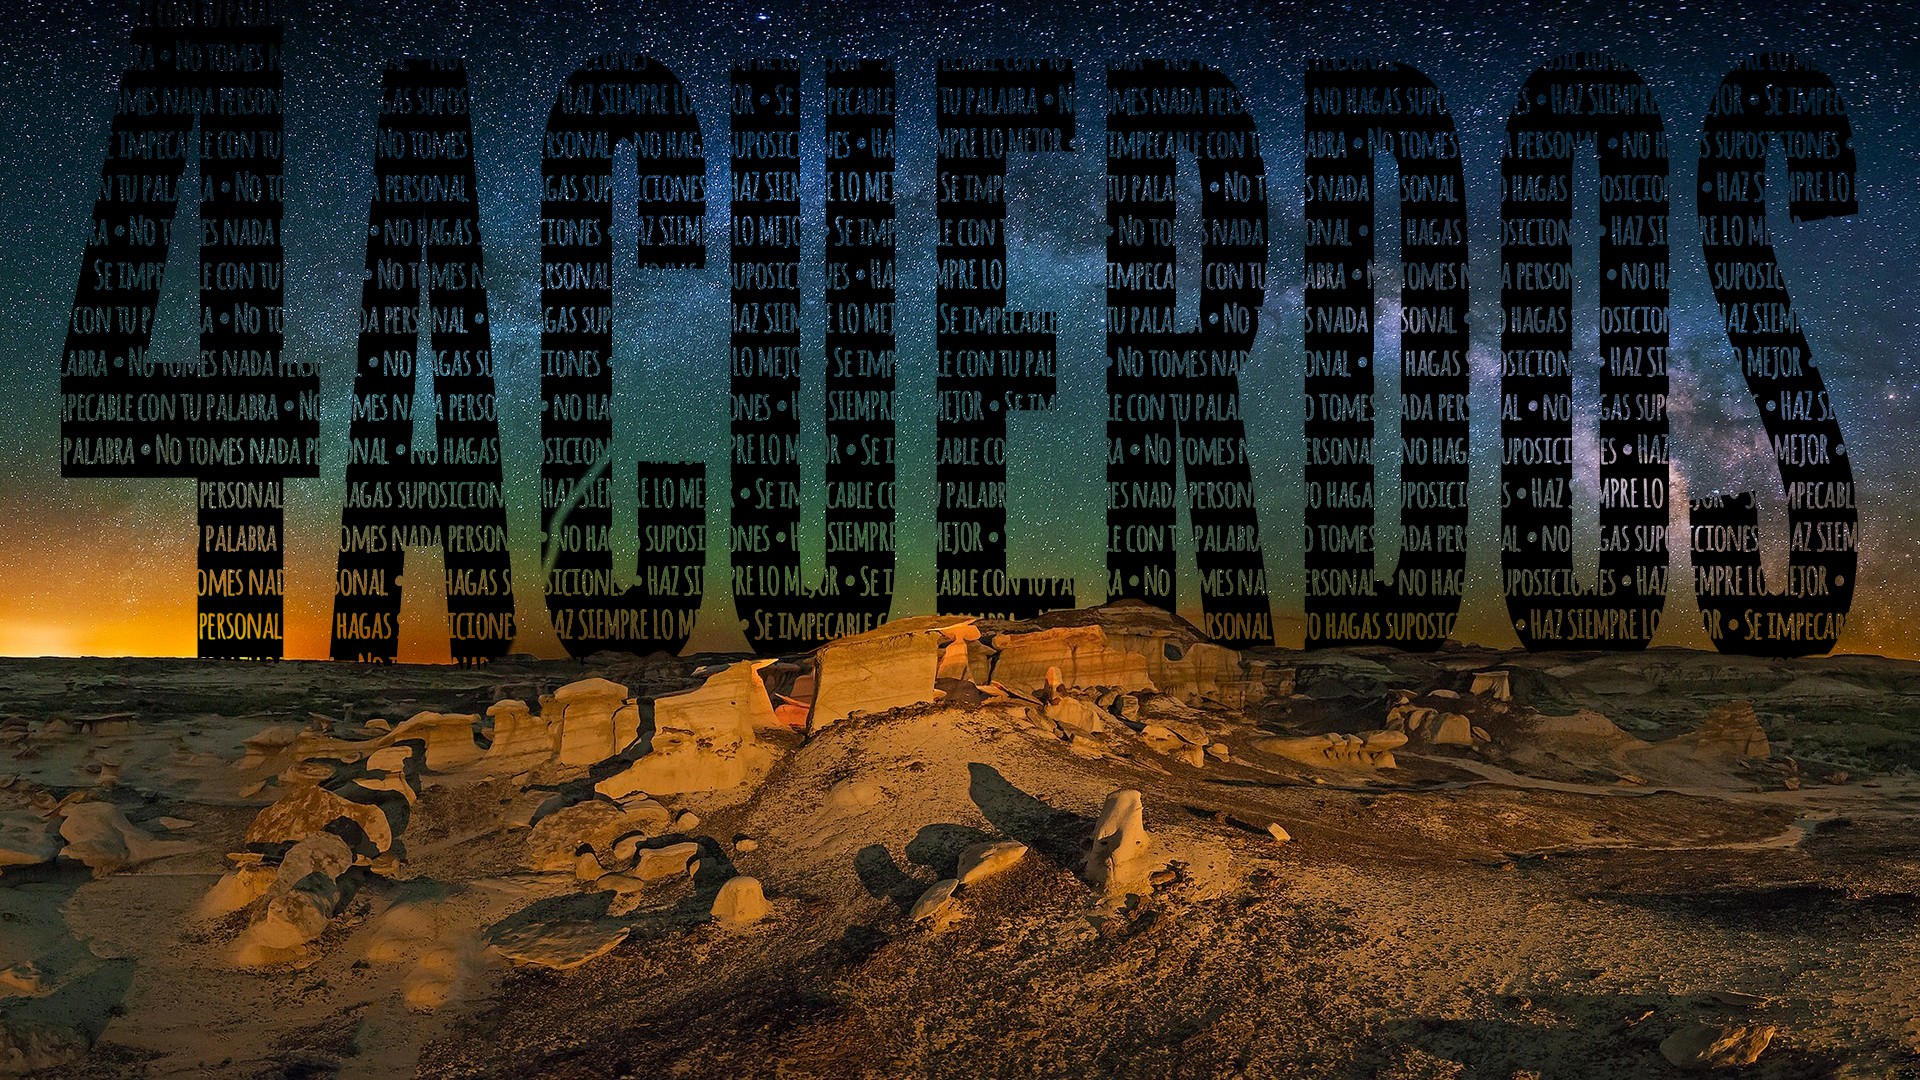 General 1920x1080 rocks nature typography digital art sky landscape outdoors stars